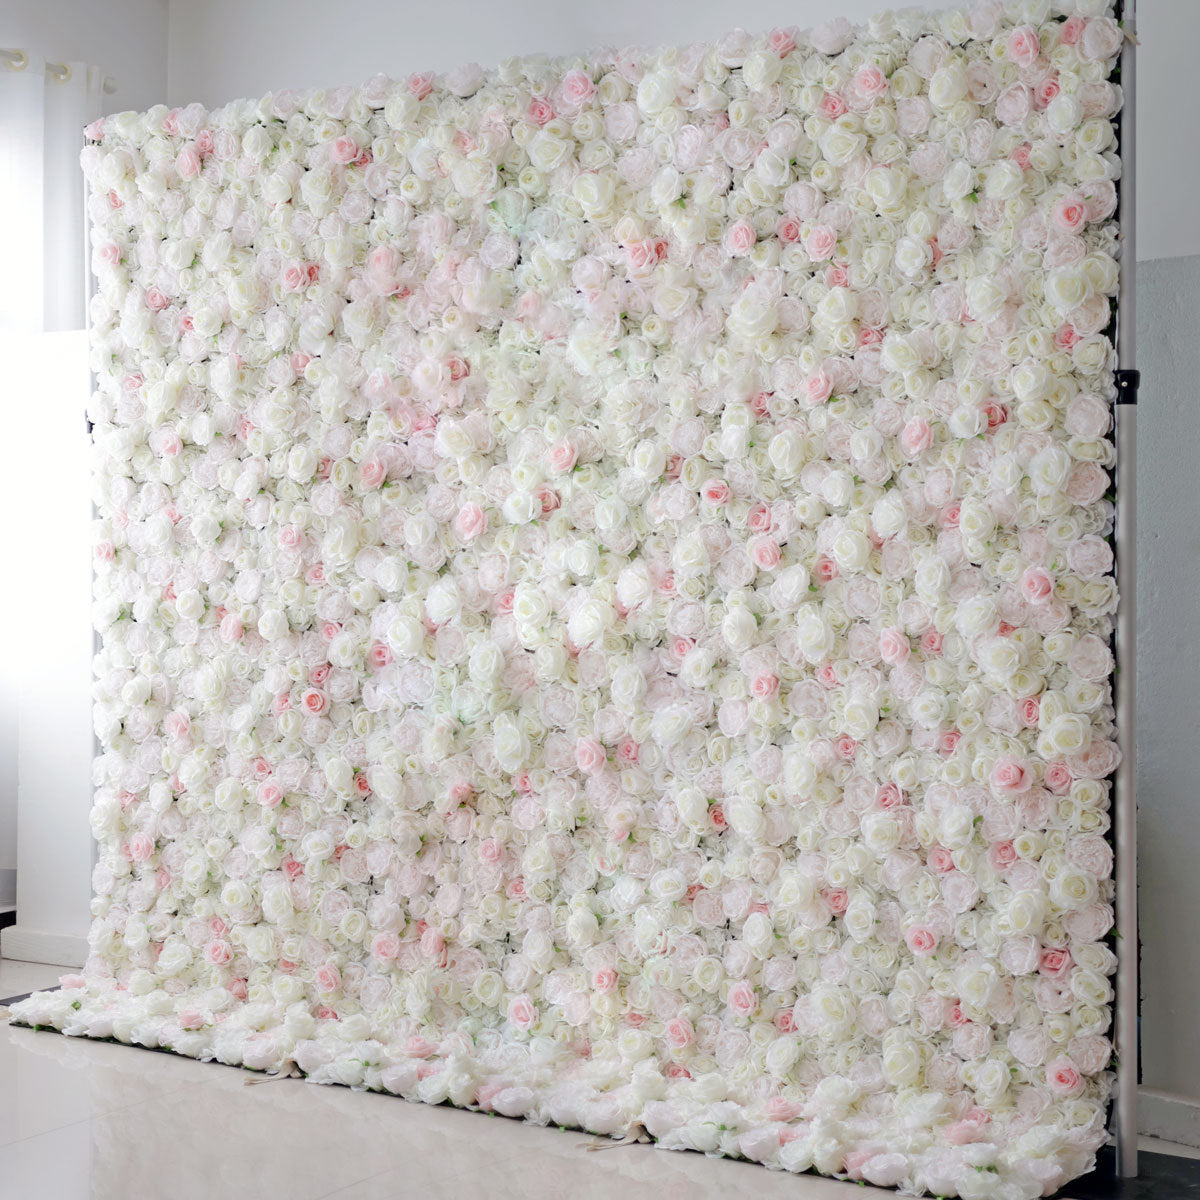 3D Artificial Flower Wall Arrangement Wedding Party Birthday Backdrop Decor HQ1182